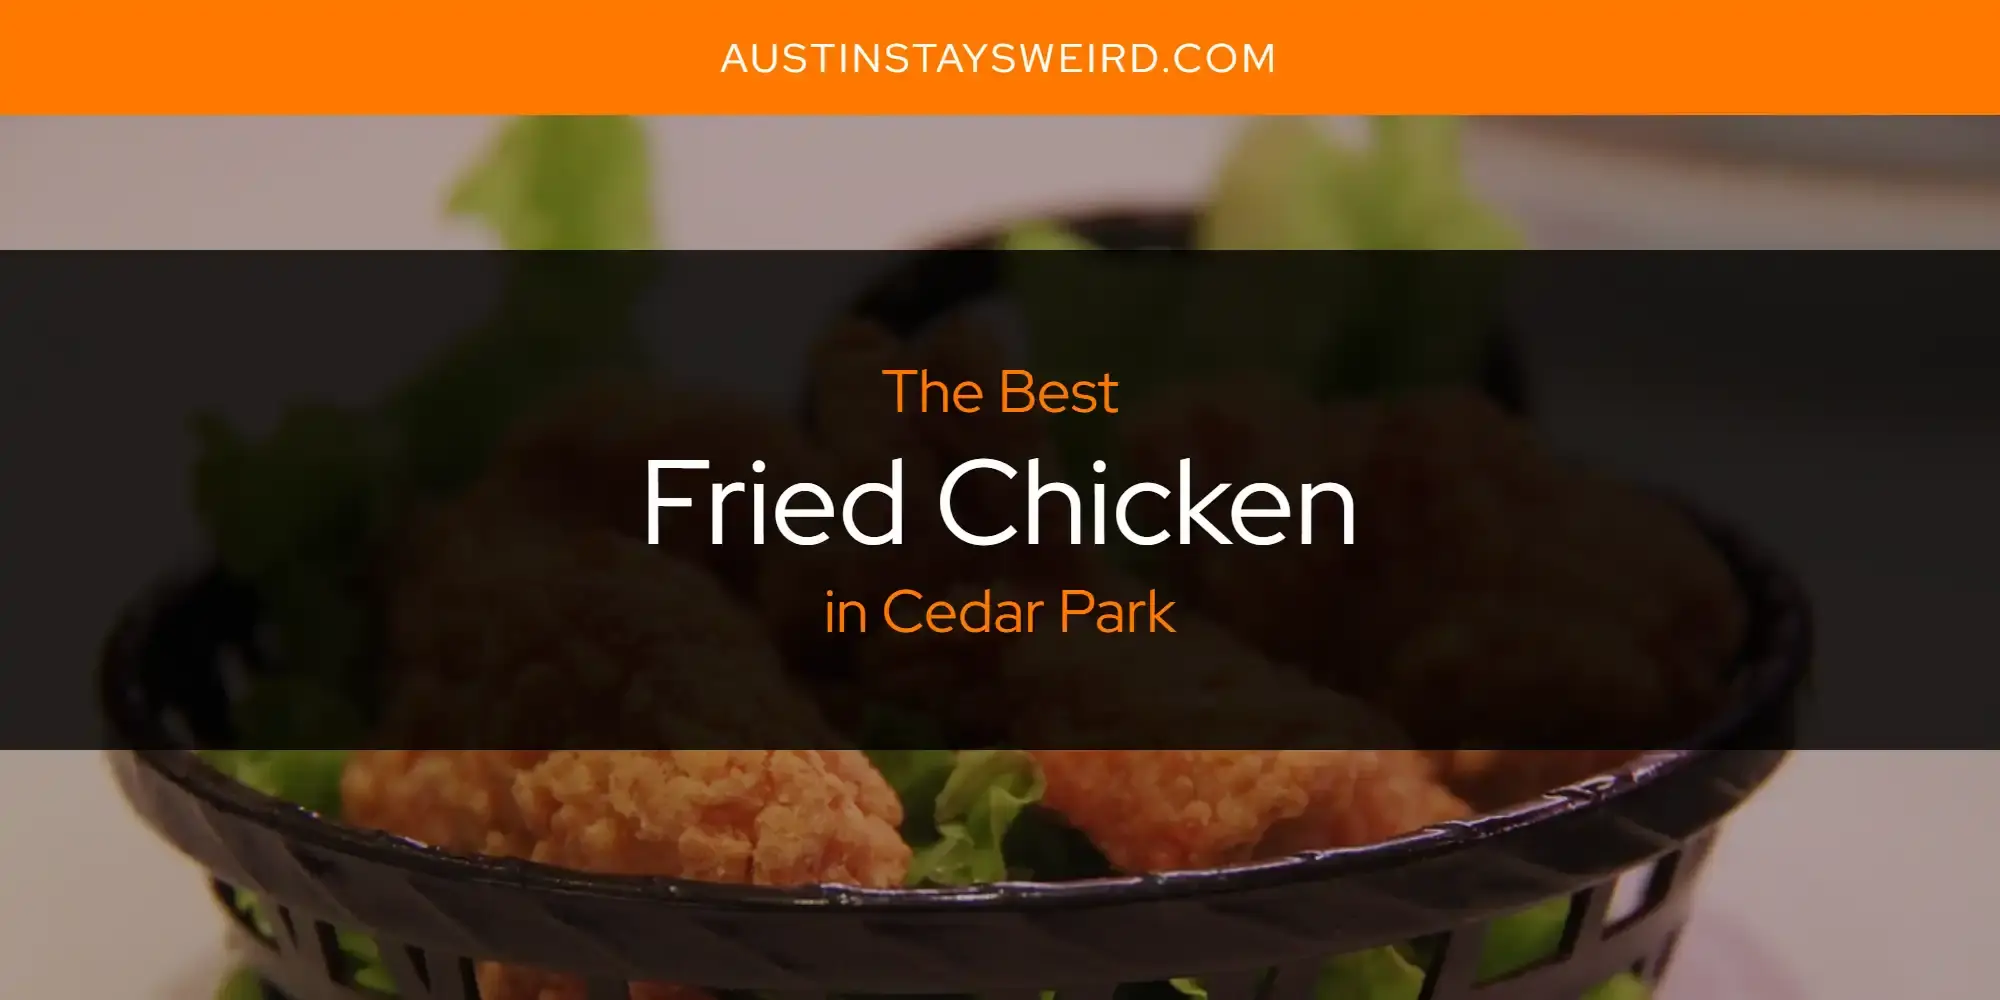 Best Fried Chicken in Cedar Park? Here's the Top 8